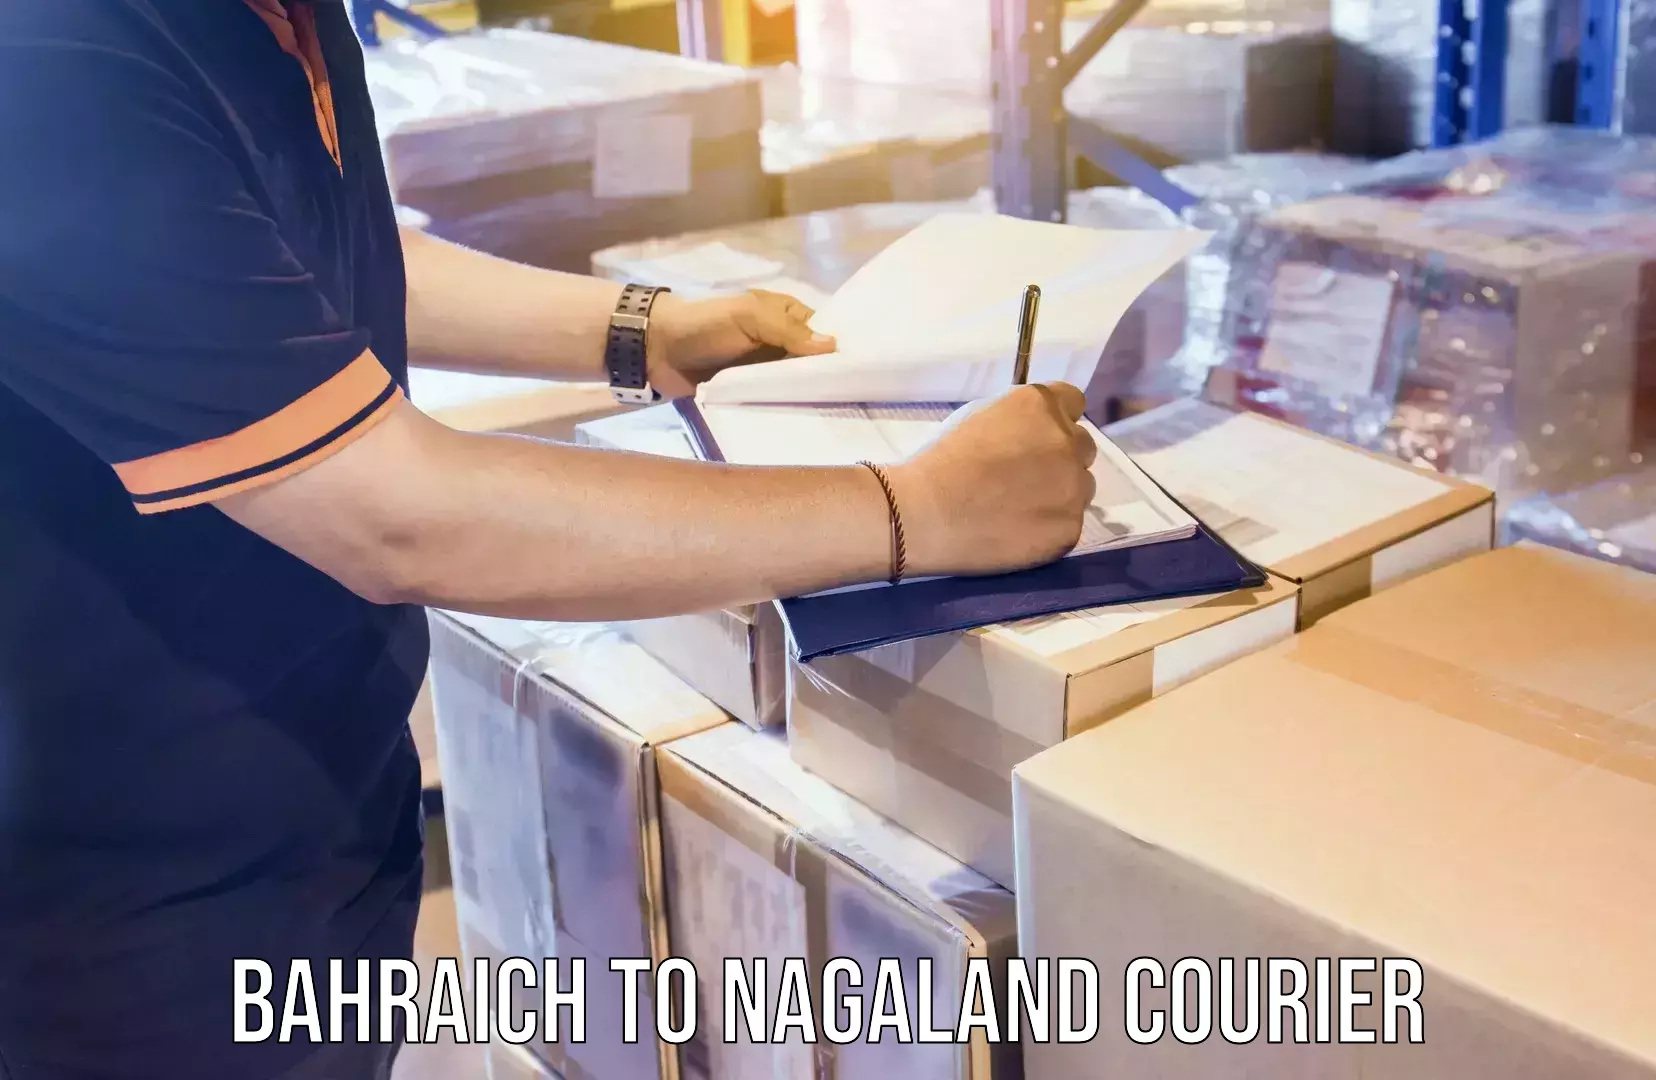 On-call courier service Bahraich to Nagaland